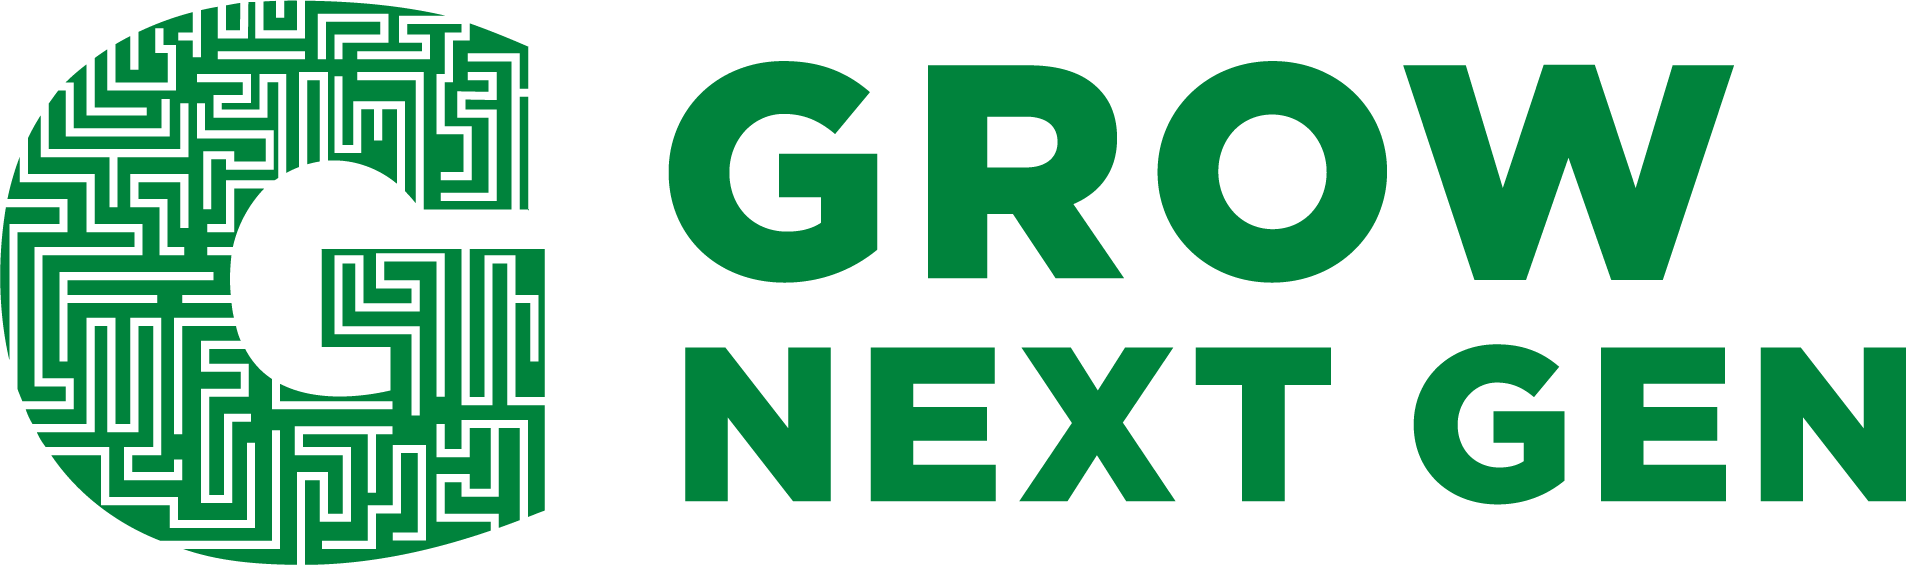 GrowNextGen Resources Added to Open Space